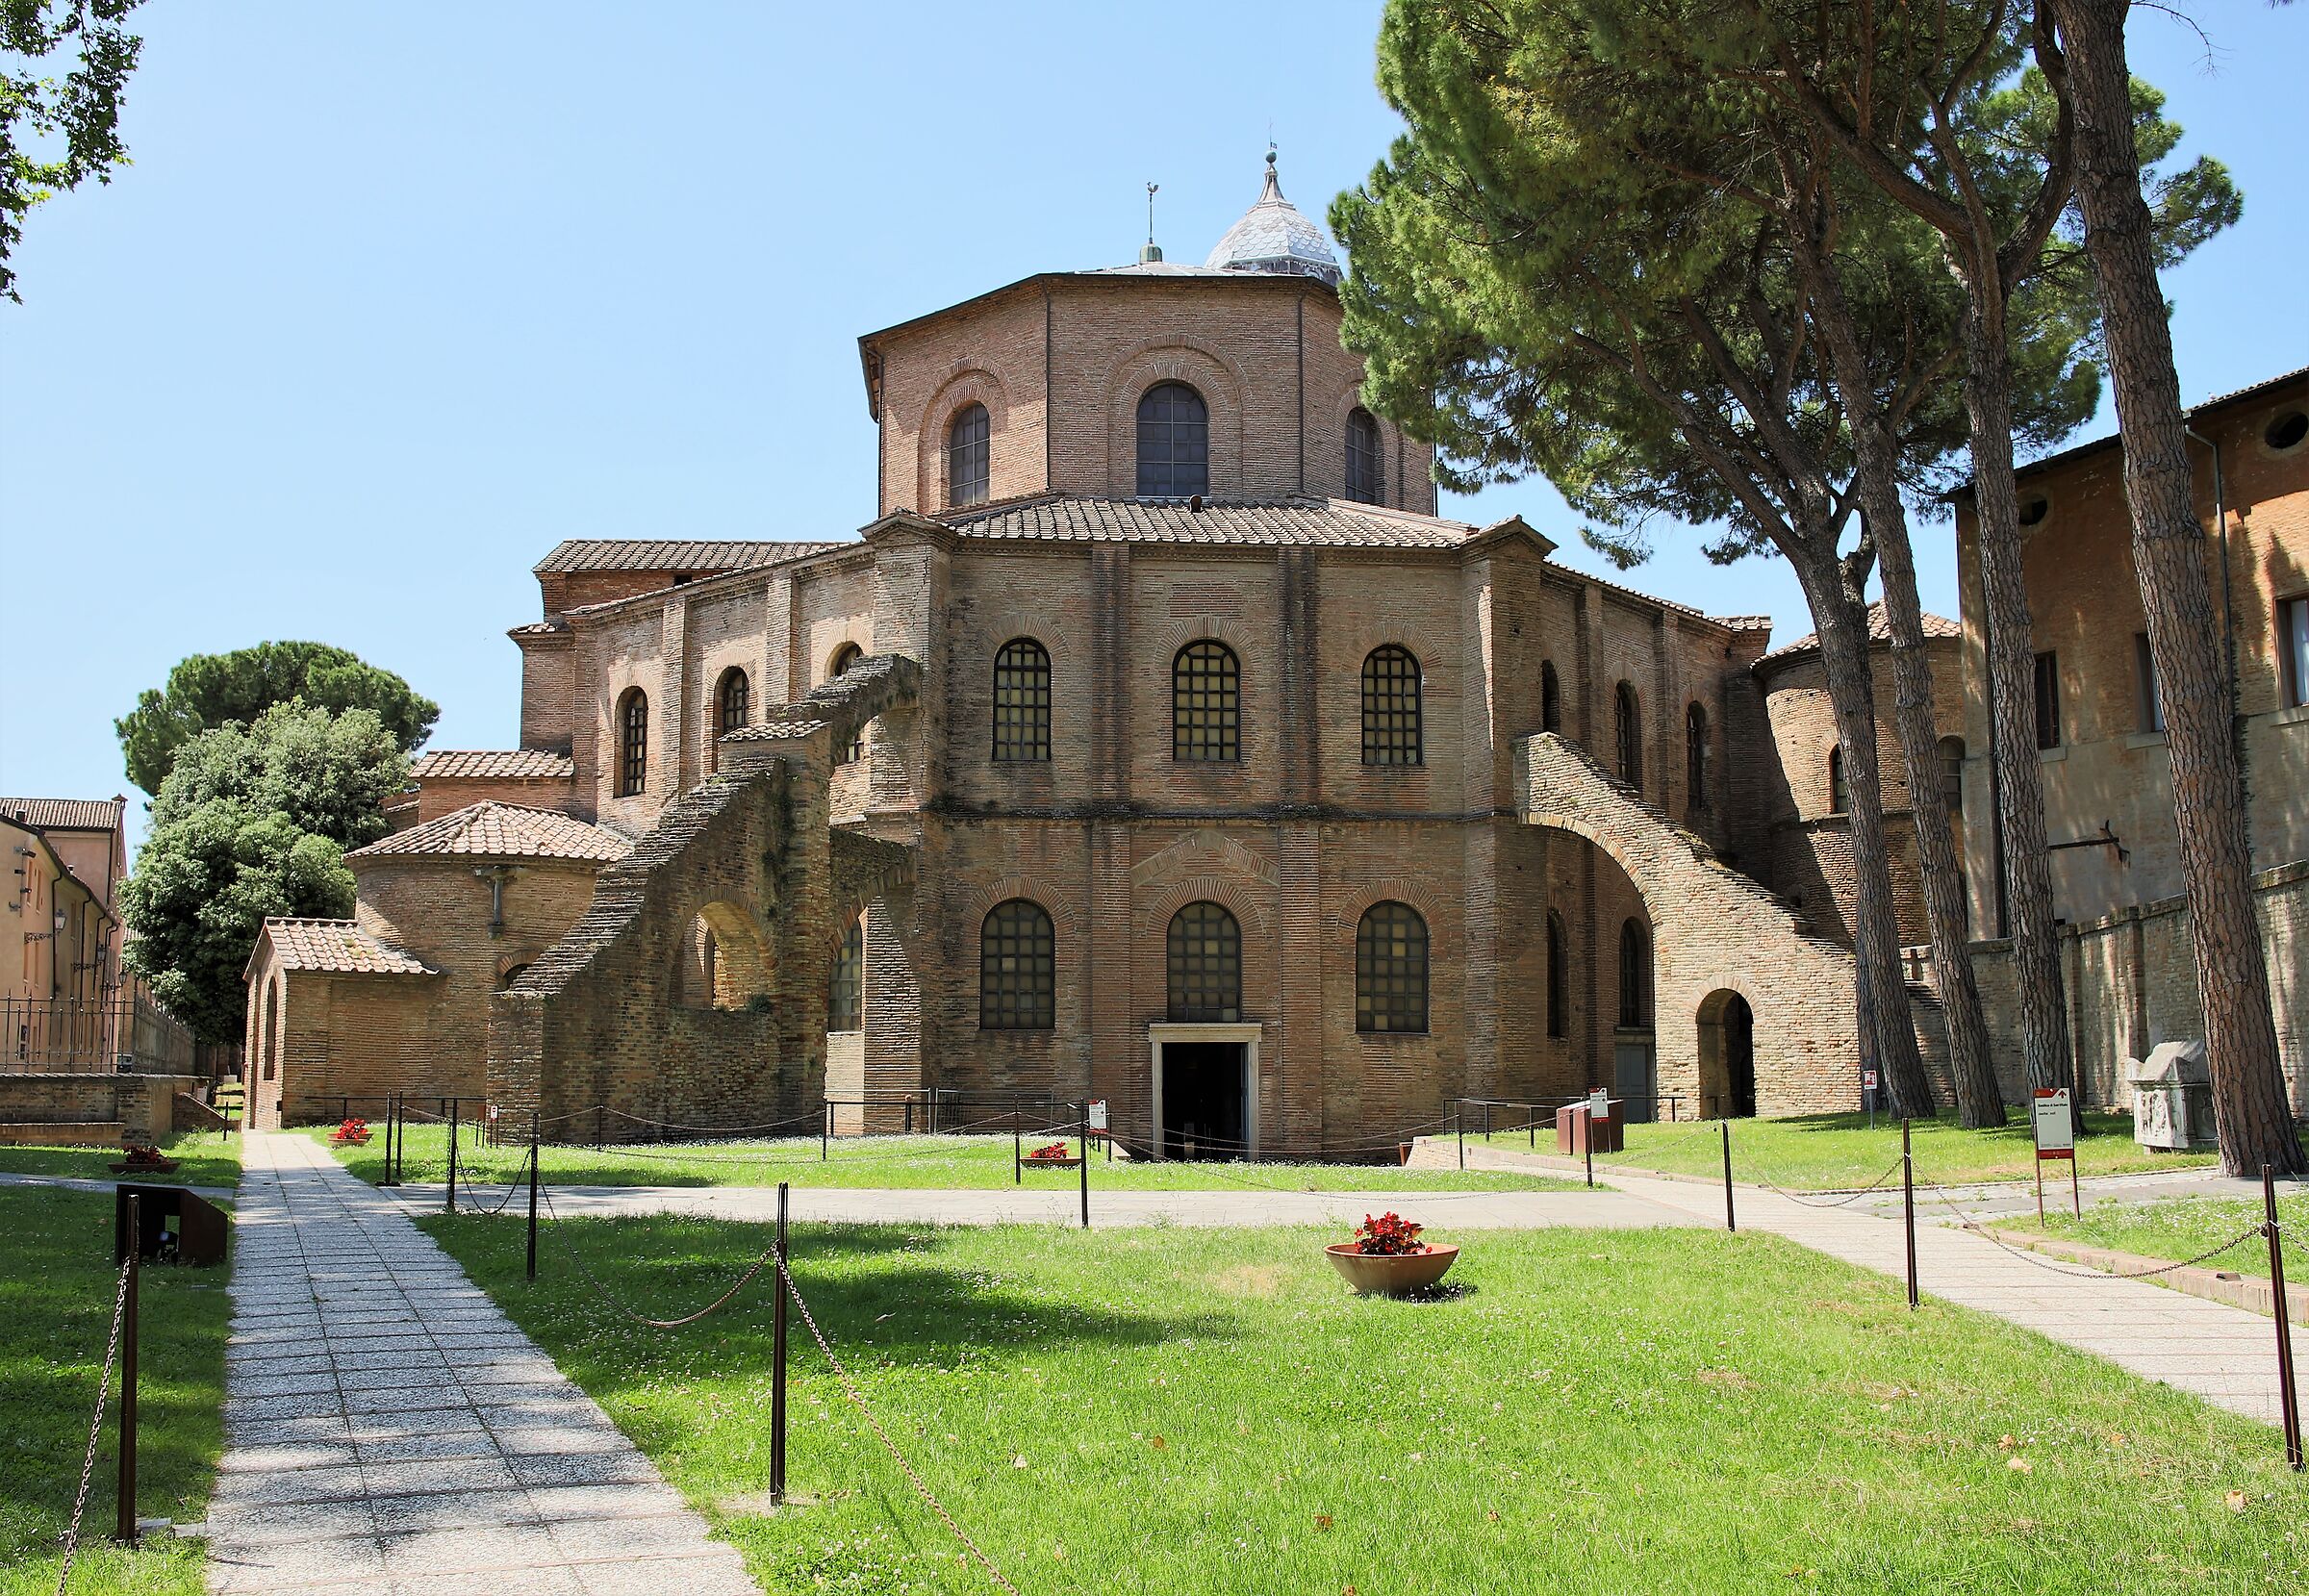 Basilica of San Vitale...